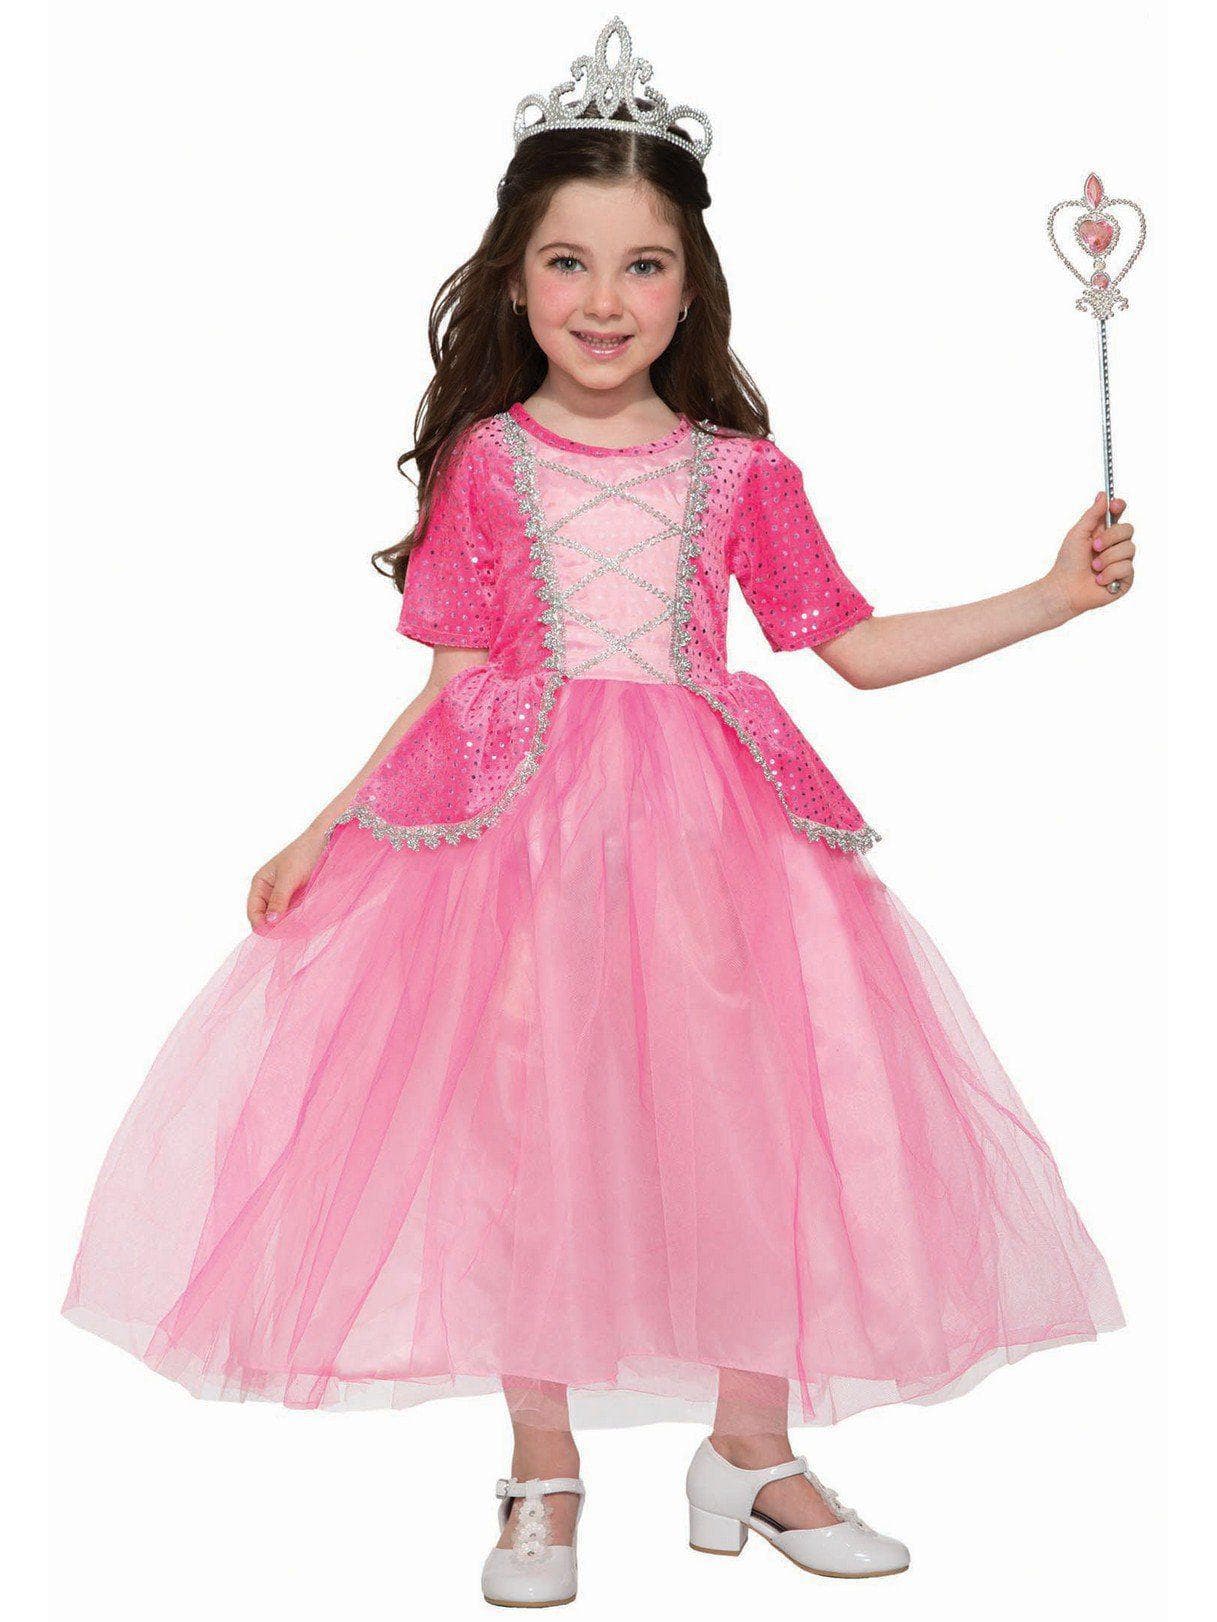 Kid's Princess Silver Rose Costume - costumes.com